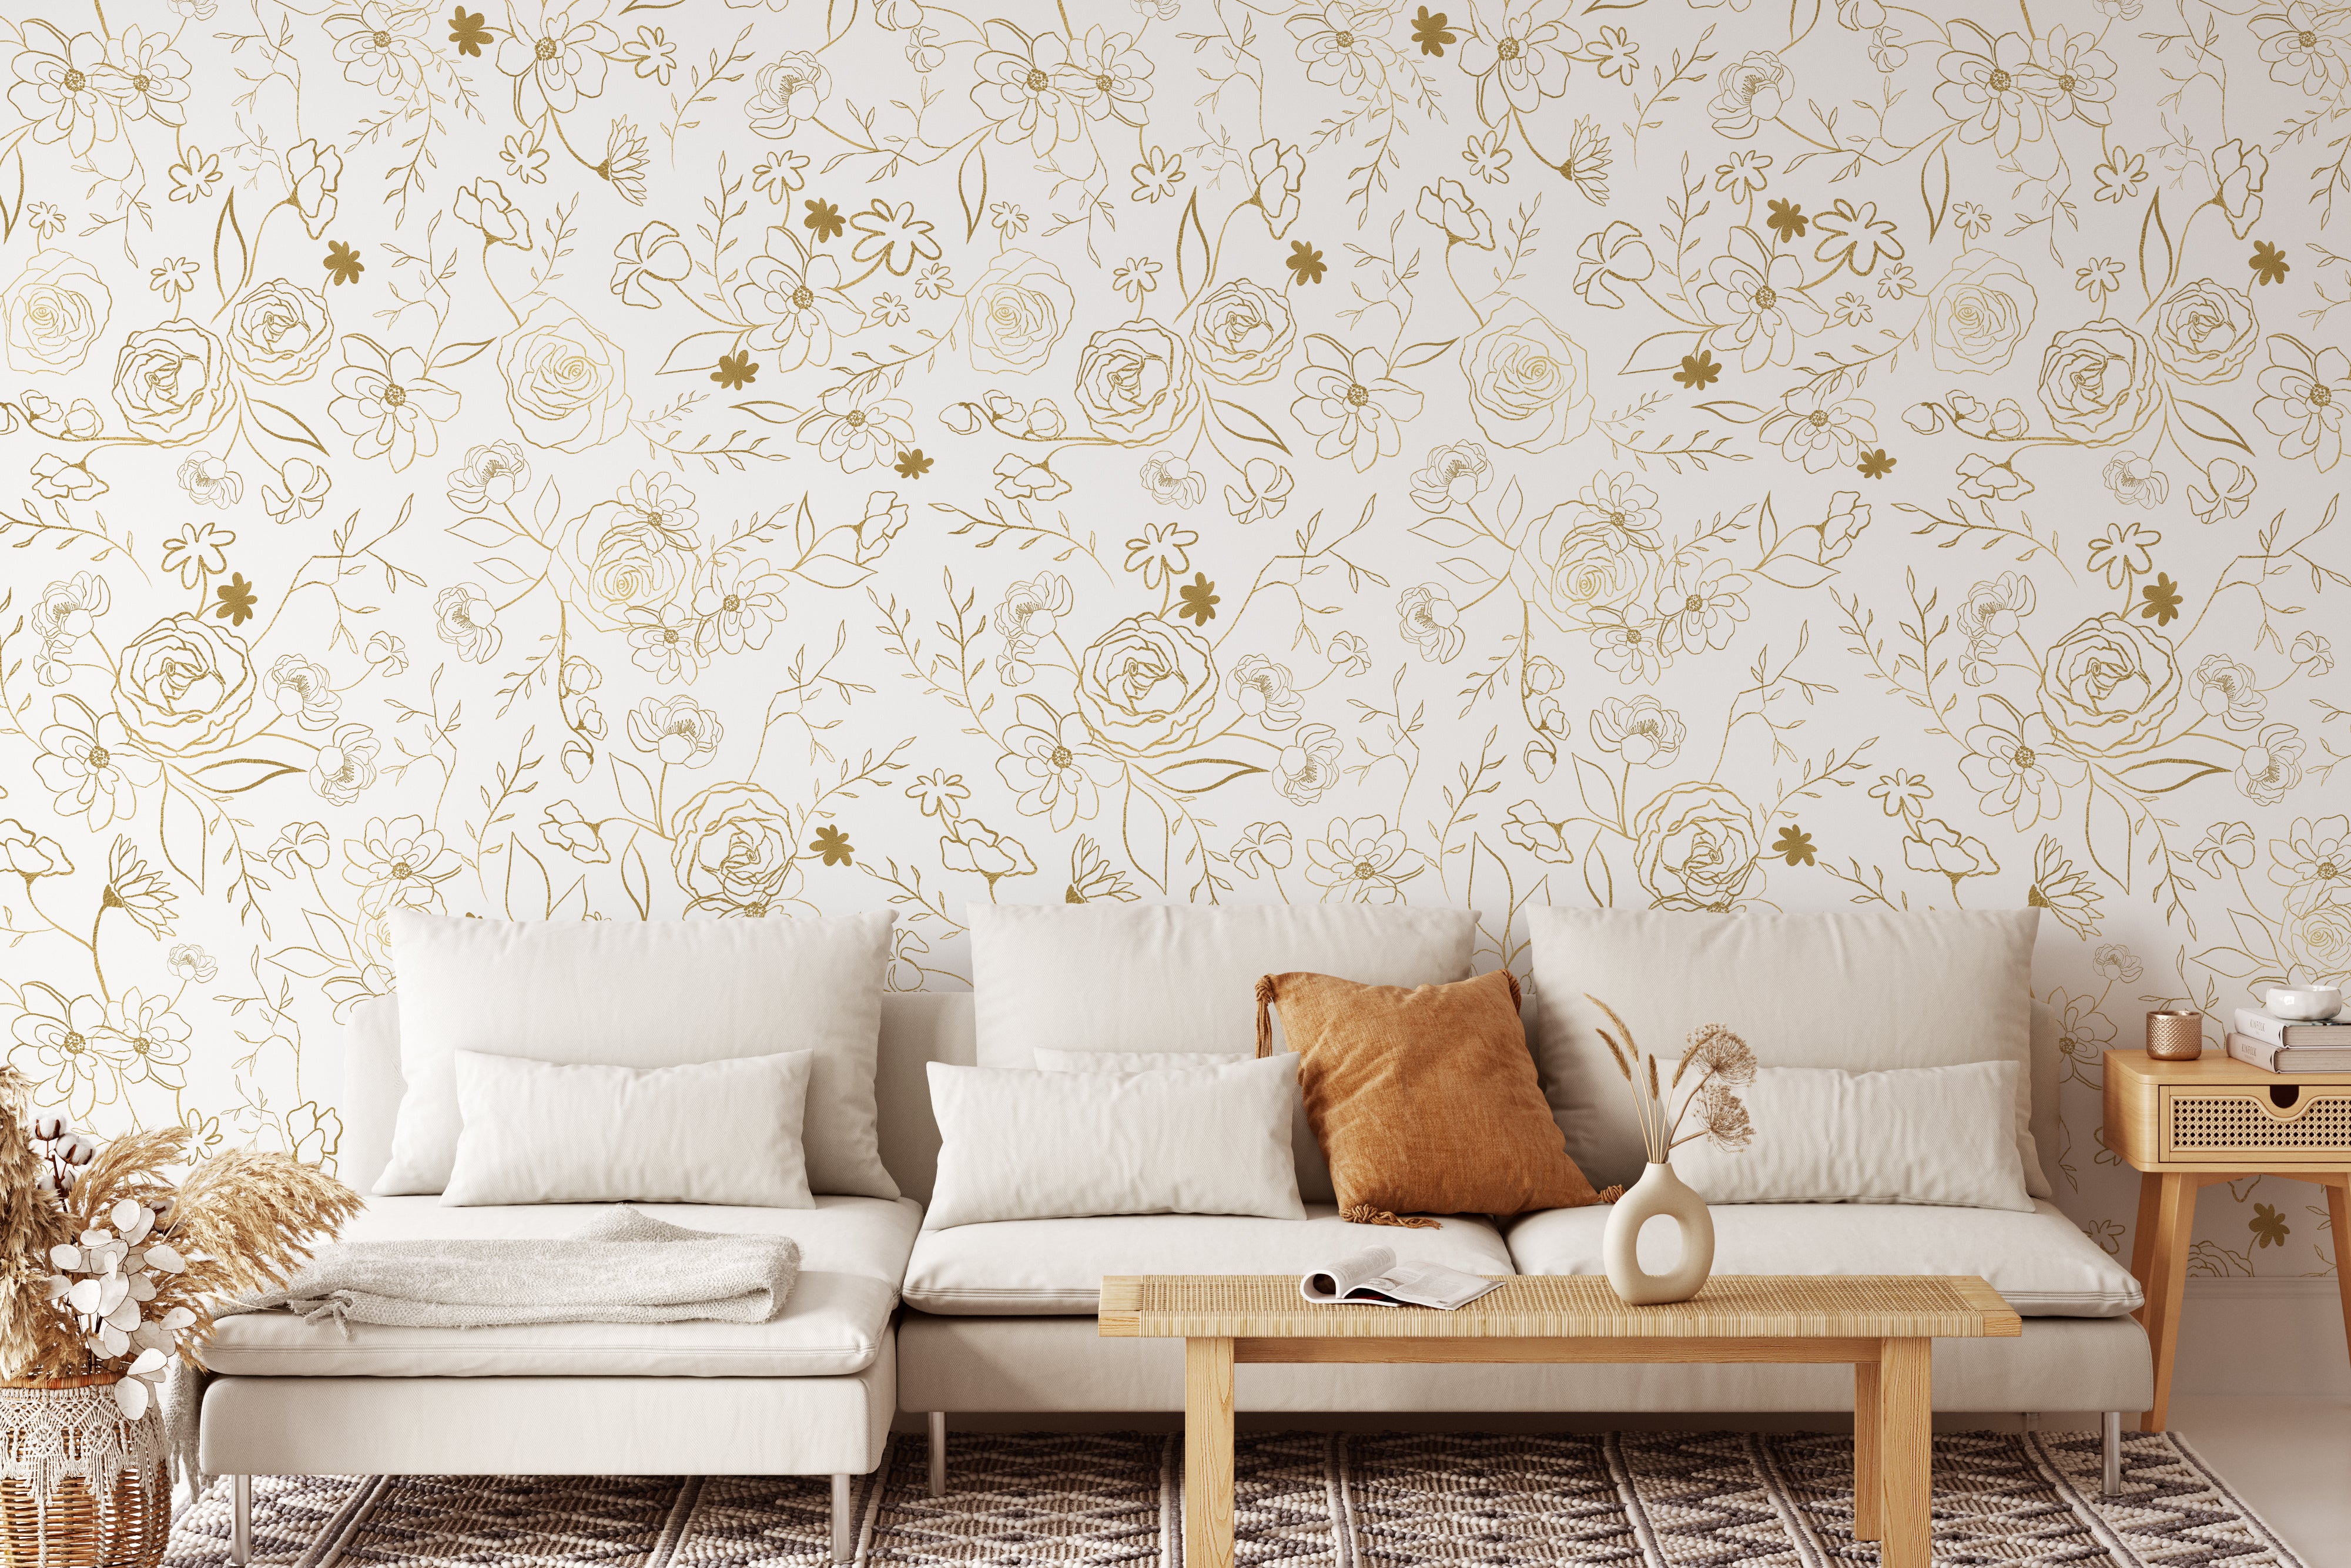 Golden Hour Wallpaper - Wall Blush SG02 from WALL BLUSH